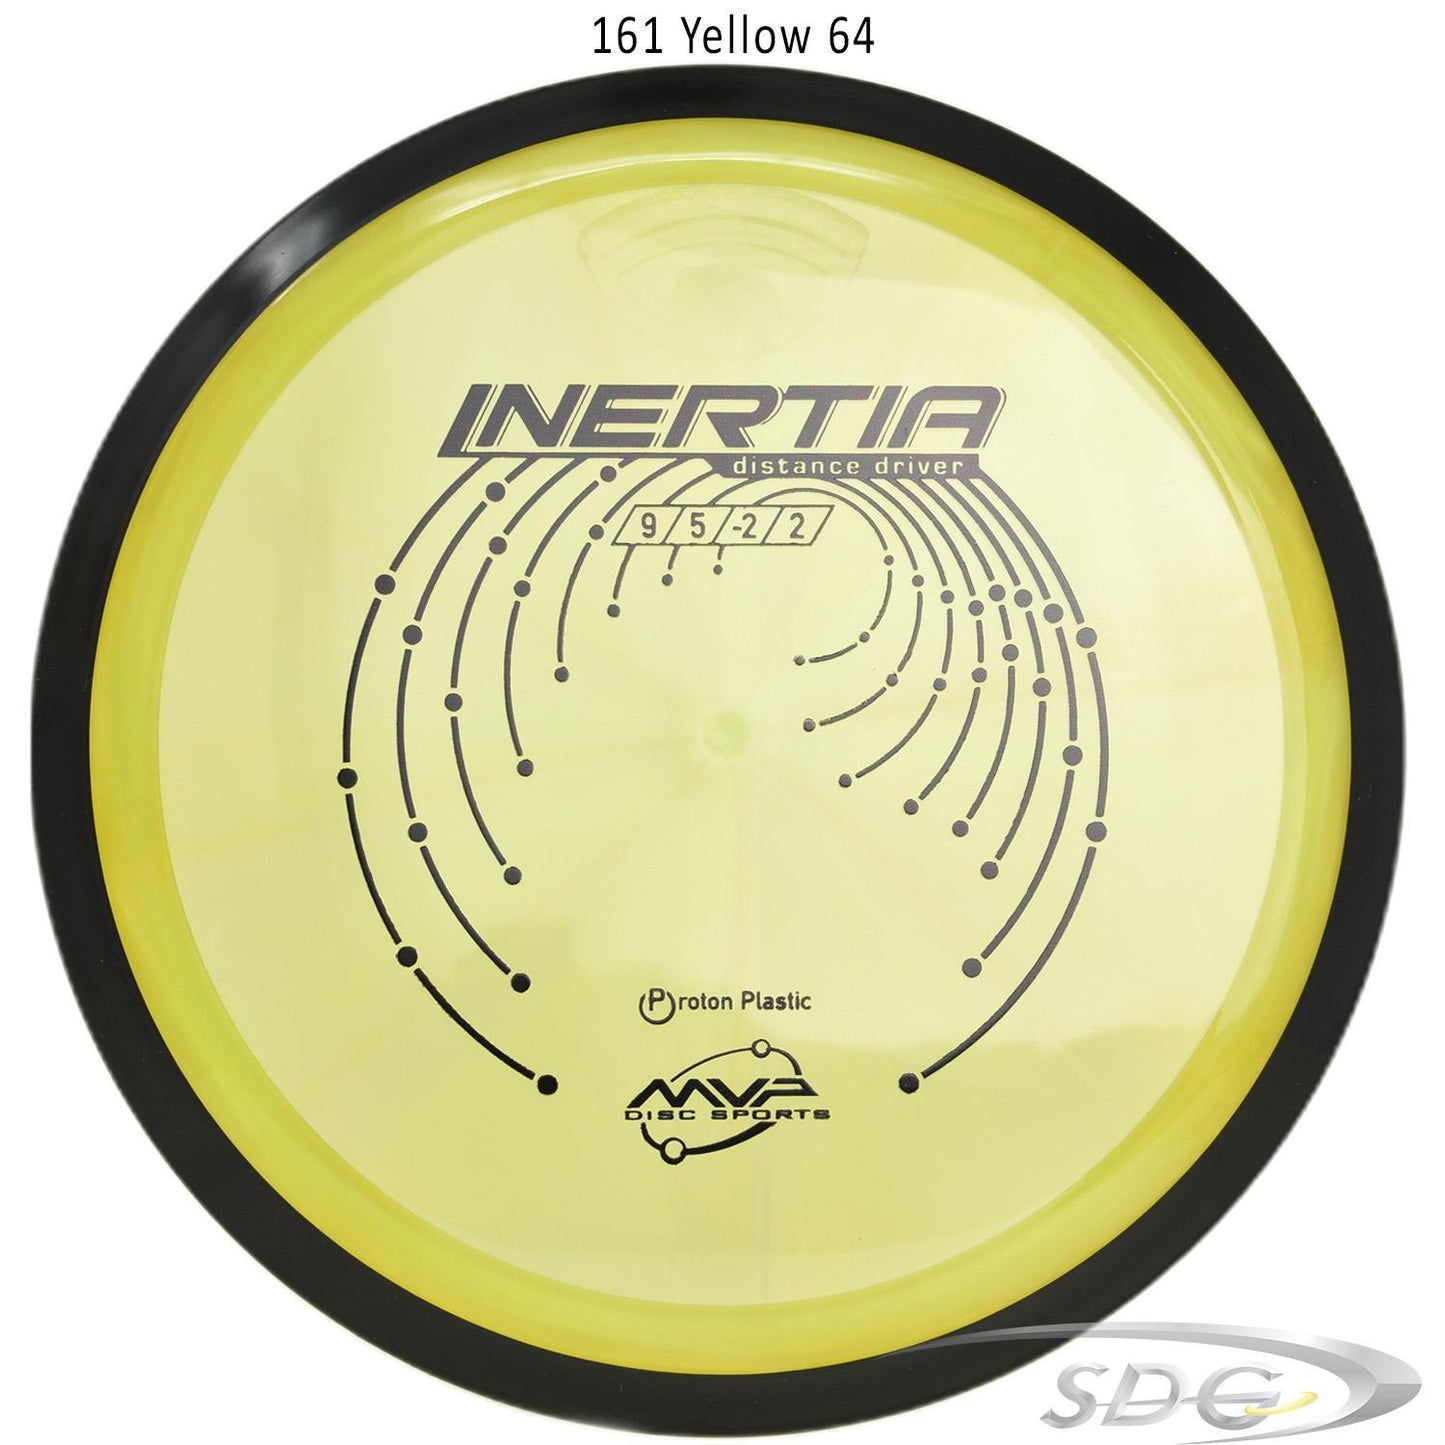 mvp-proton-inertia-disc-golf-distance-driver 161 Yellow 64 